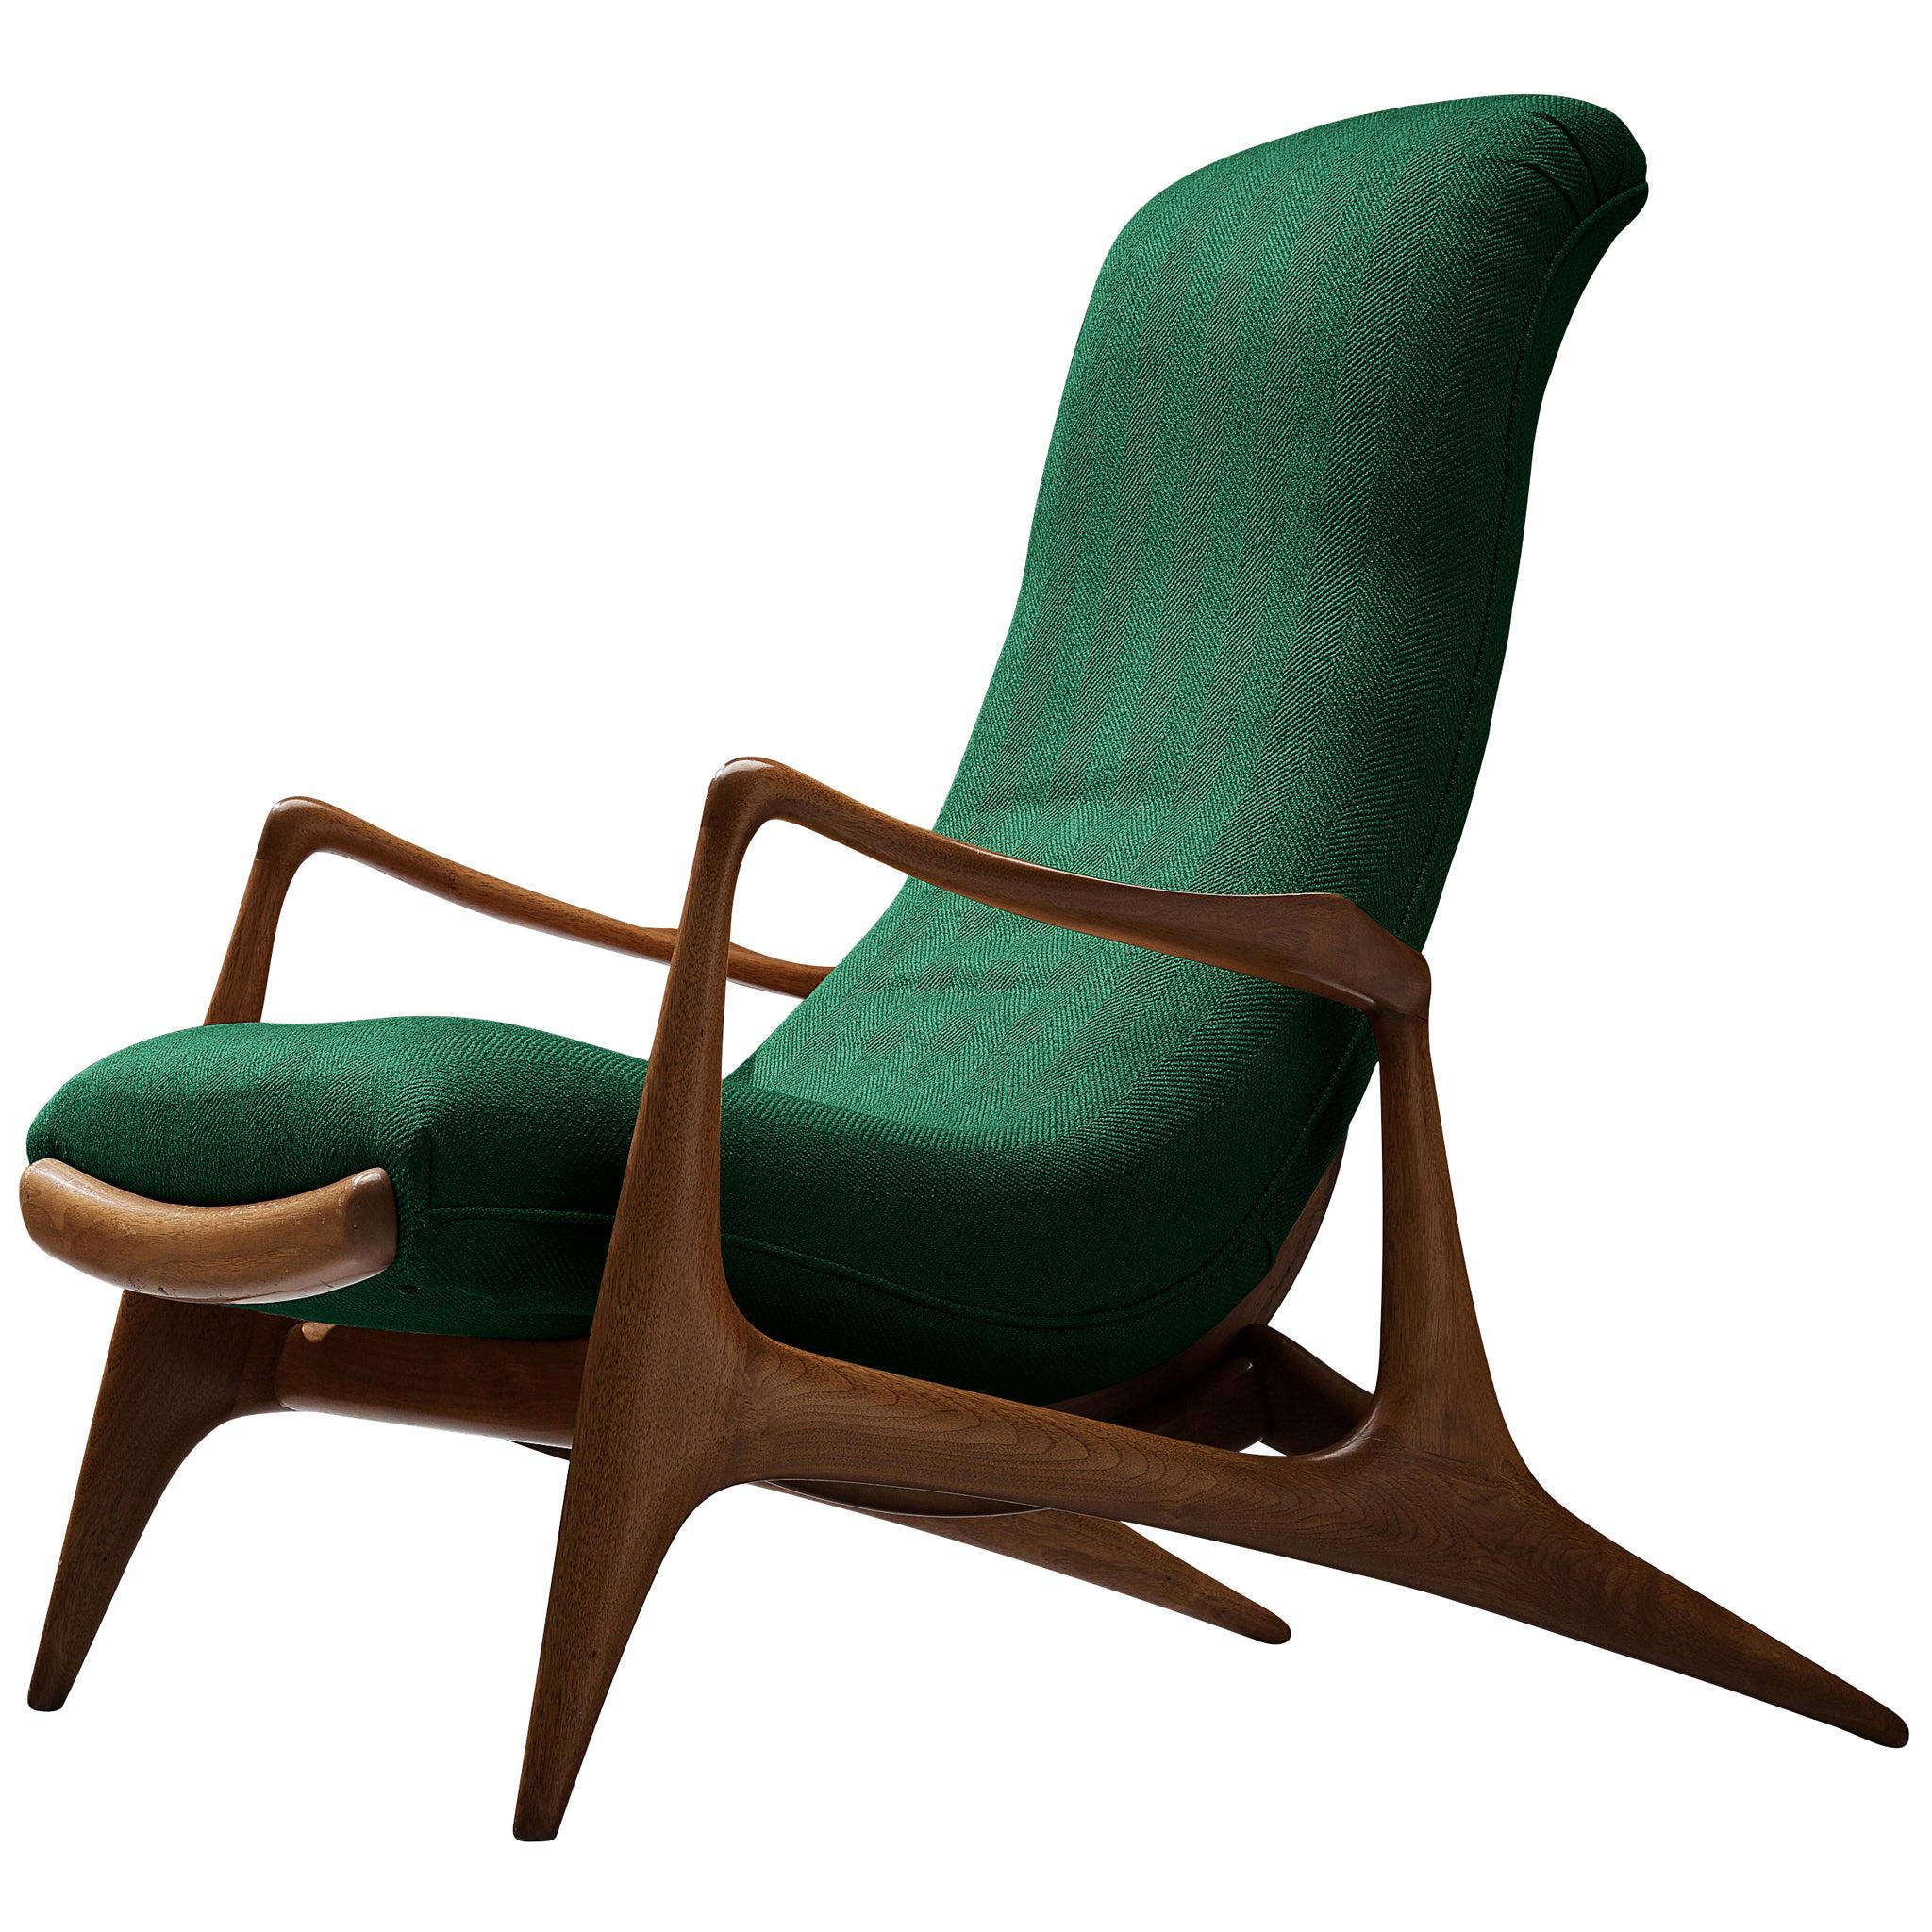 Vladimir Kagan for Dreyfuss Reclining ‘Contour’ Lounge Chair in Green Upholstery